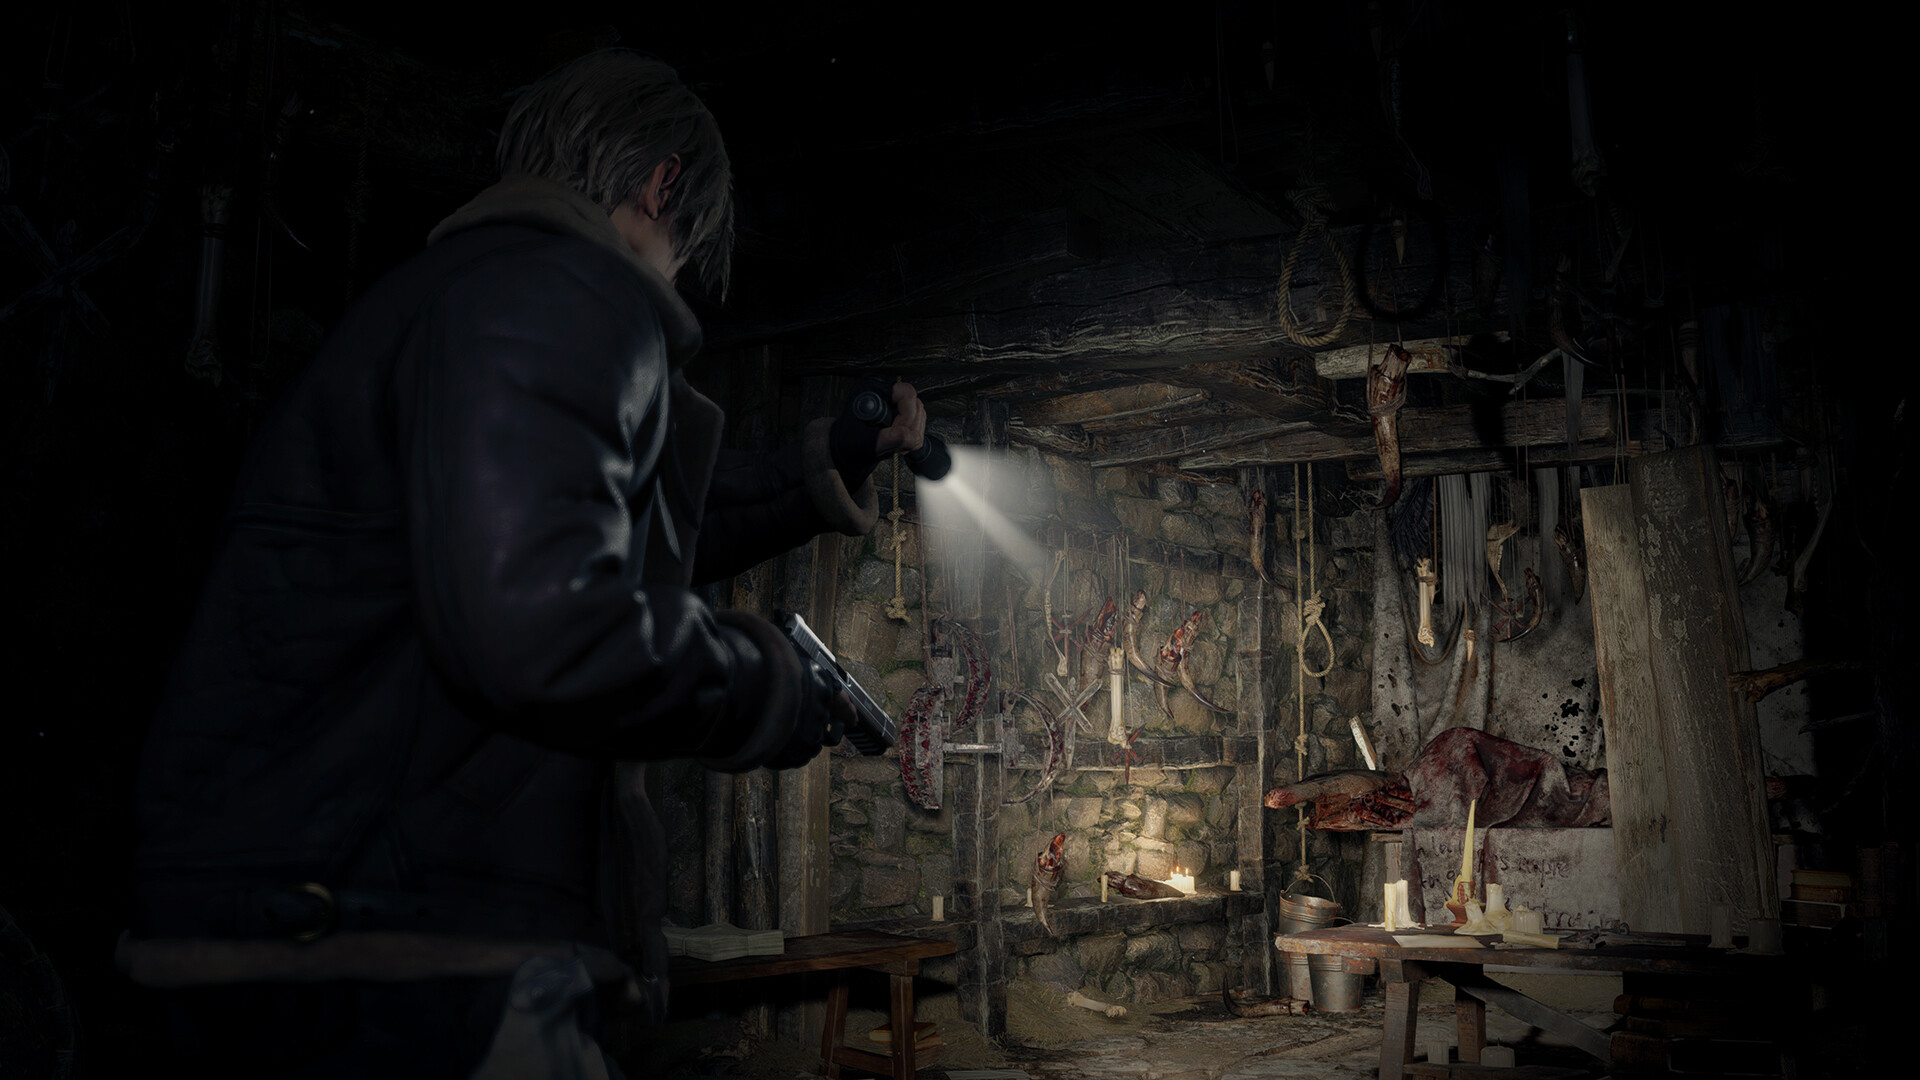 Review: Resident Evil 4 Remake